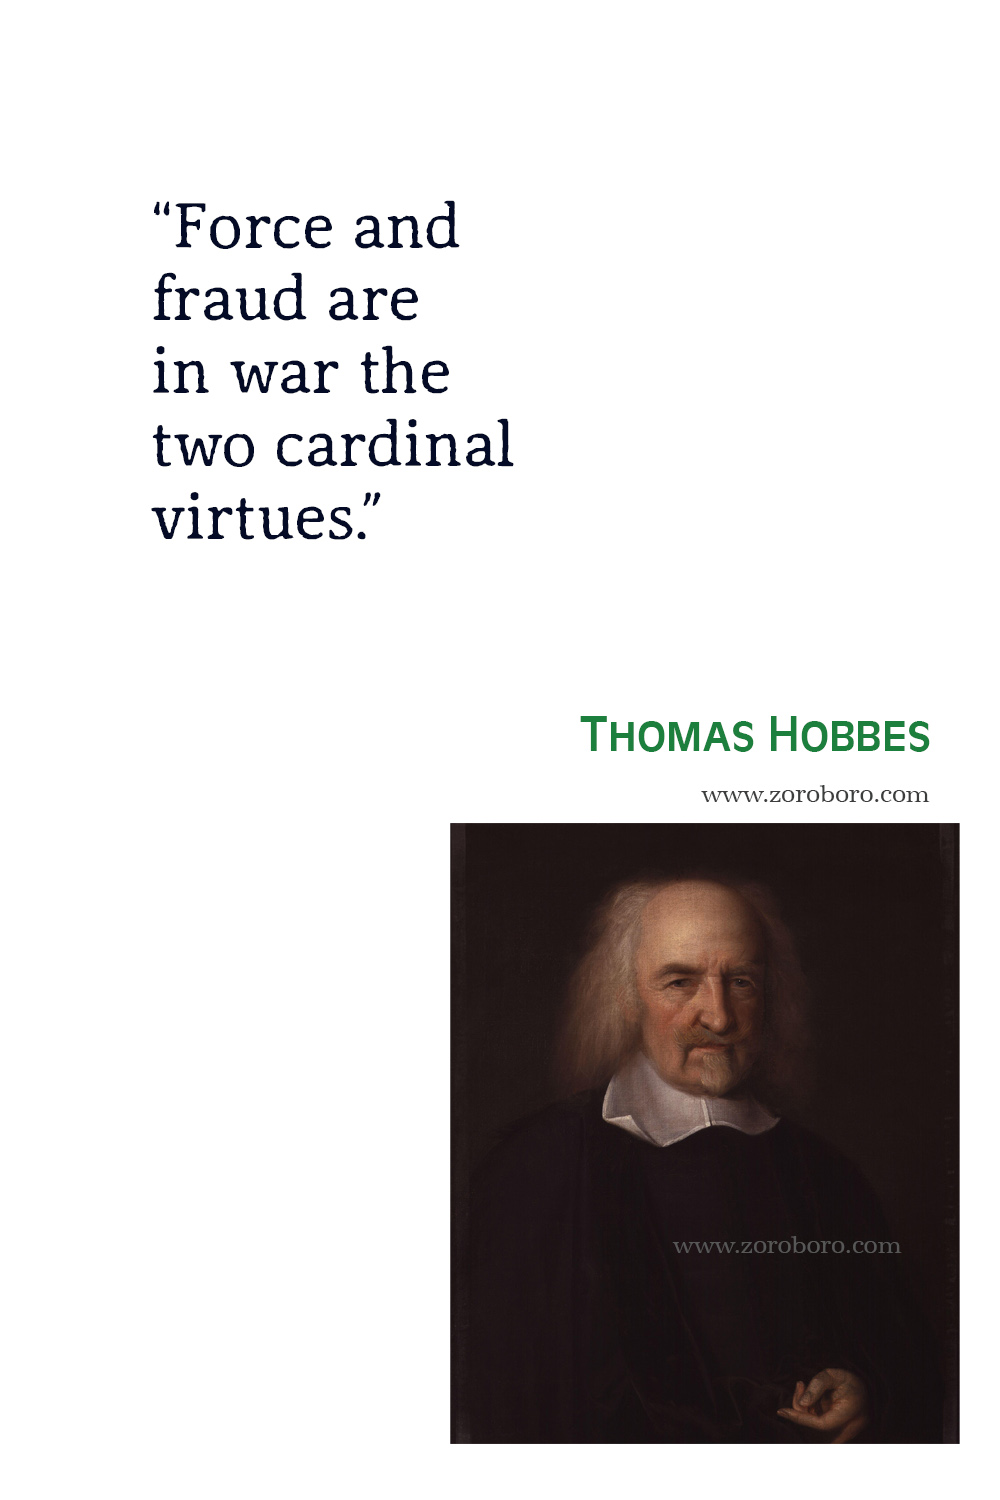 Thomas Hobbes Quotes, Thomas Hobbes Theory, Thomas Hobbes Books Quotes, Thomas Hobbes Leviathan Quotes. Thomas Hobbes